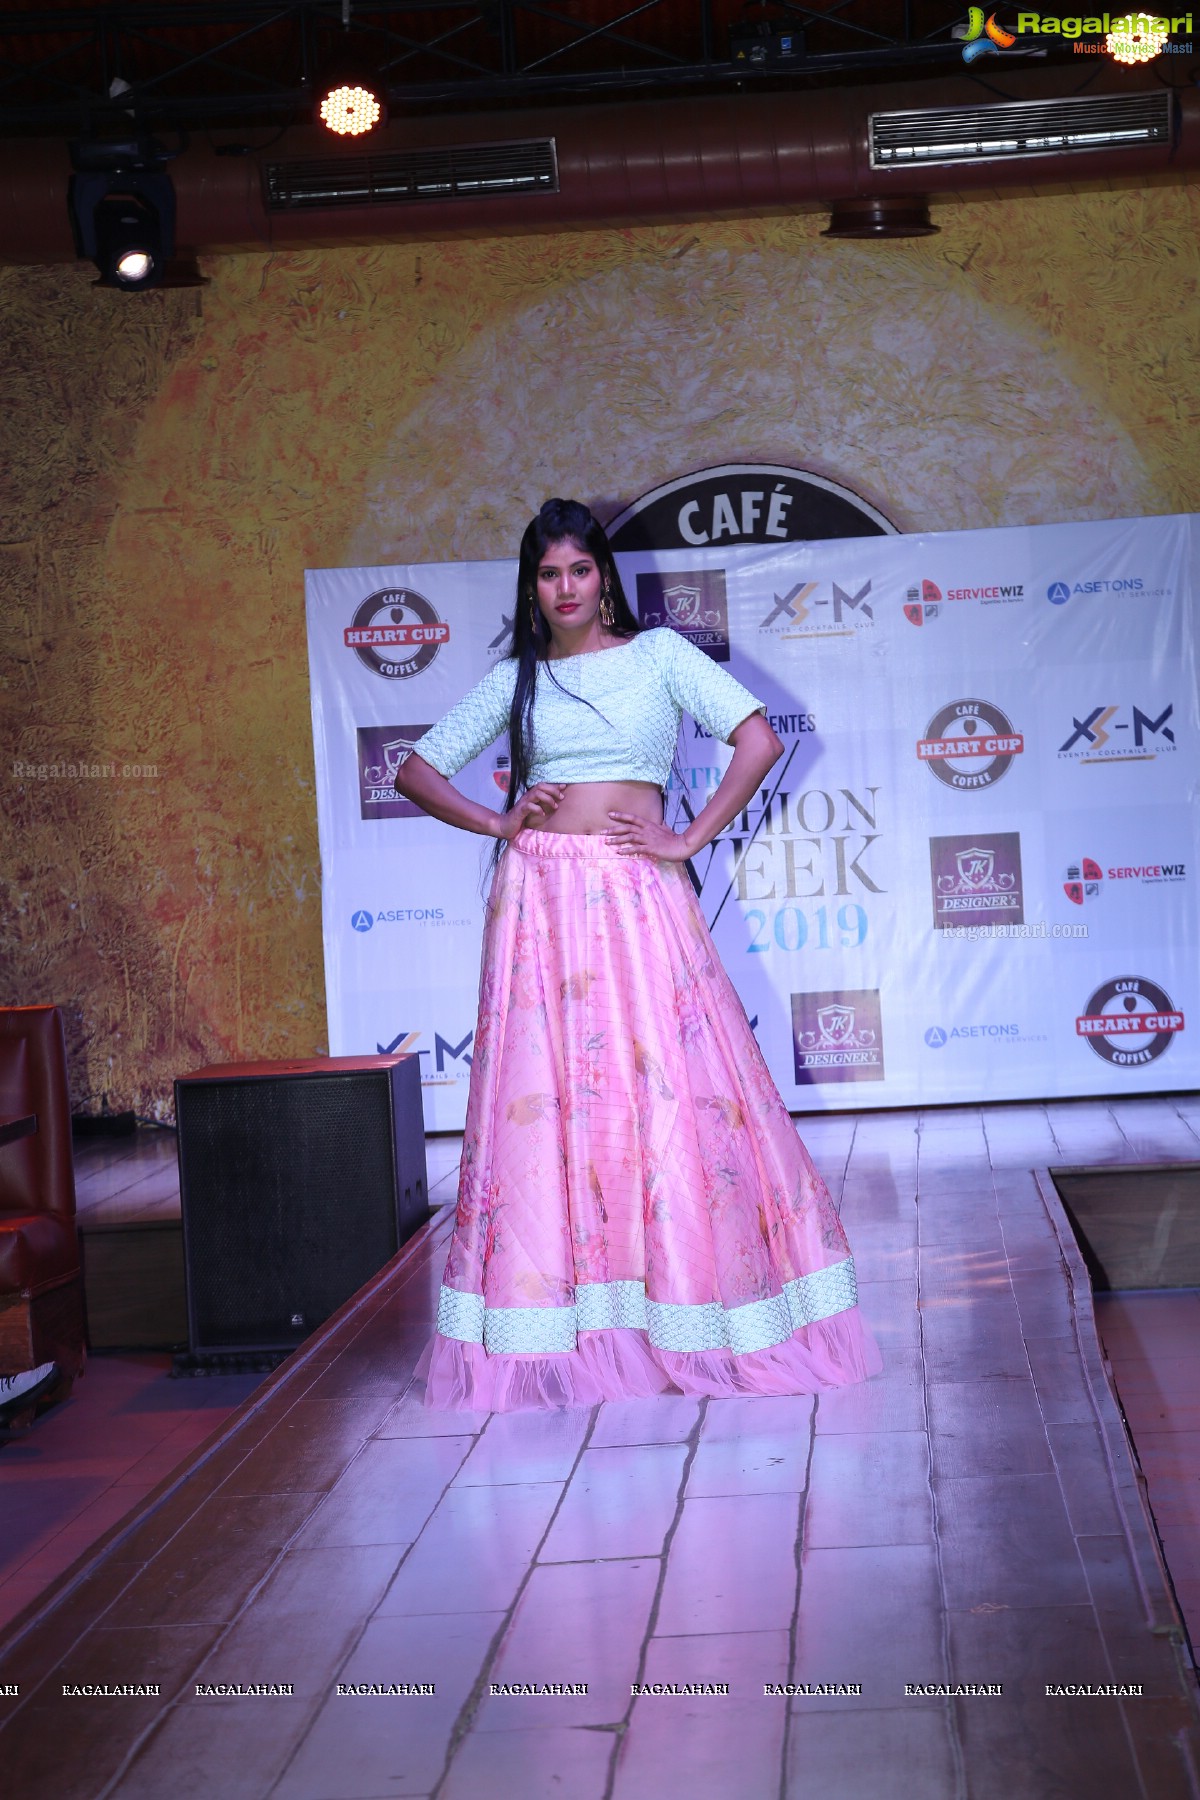 XSM Metro Fashion Week 2019 at Heart Cup Coffee, Hyderabad